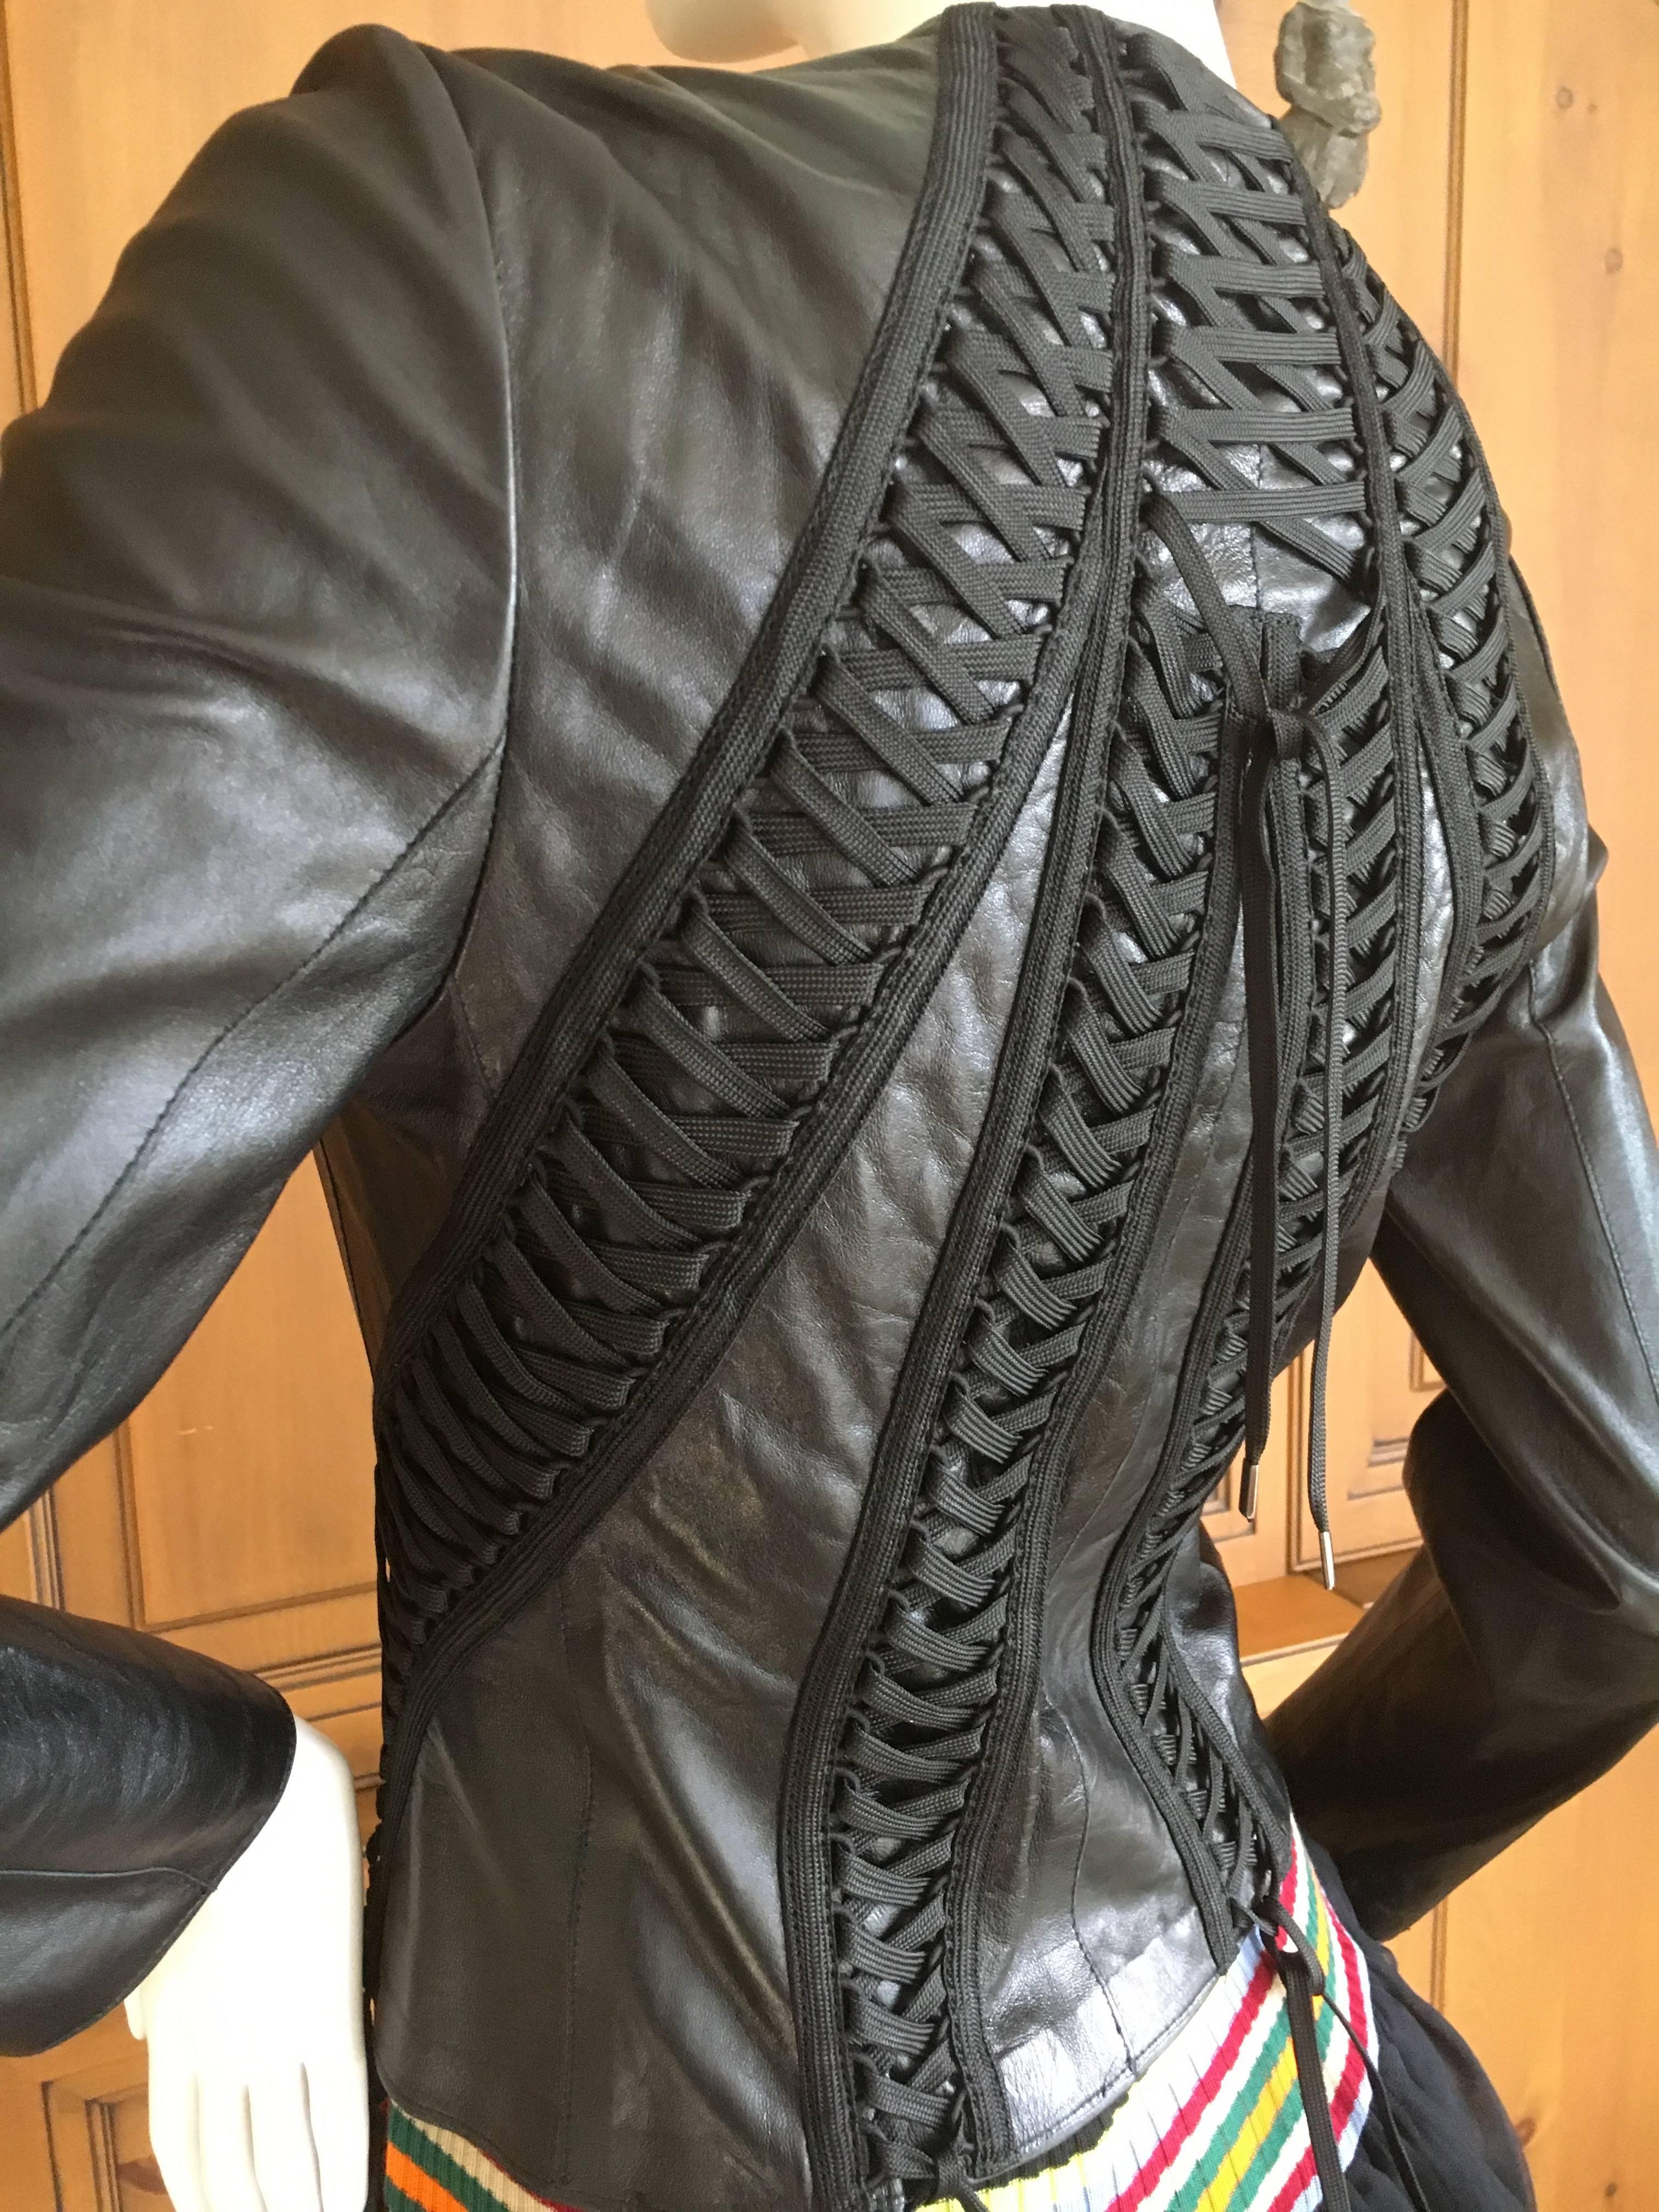 Christian Dior Black Lambskin Leather Corset Laced Bondage Jacket by John Galliano.
Size 40
Bust 36